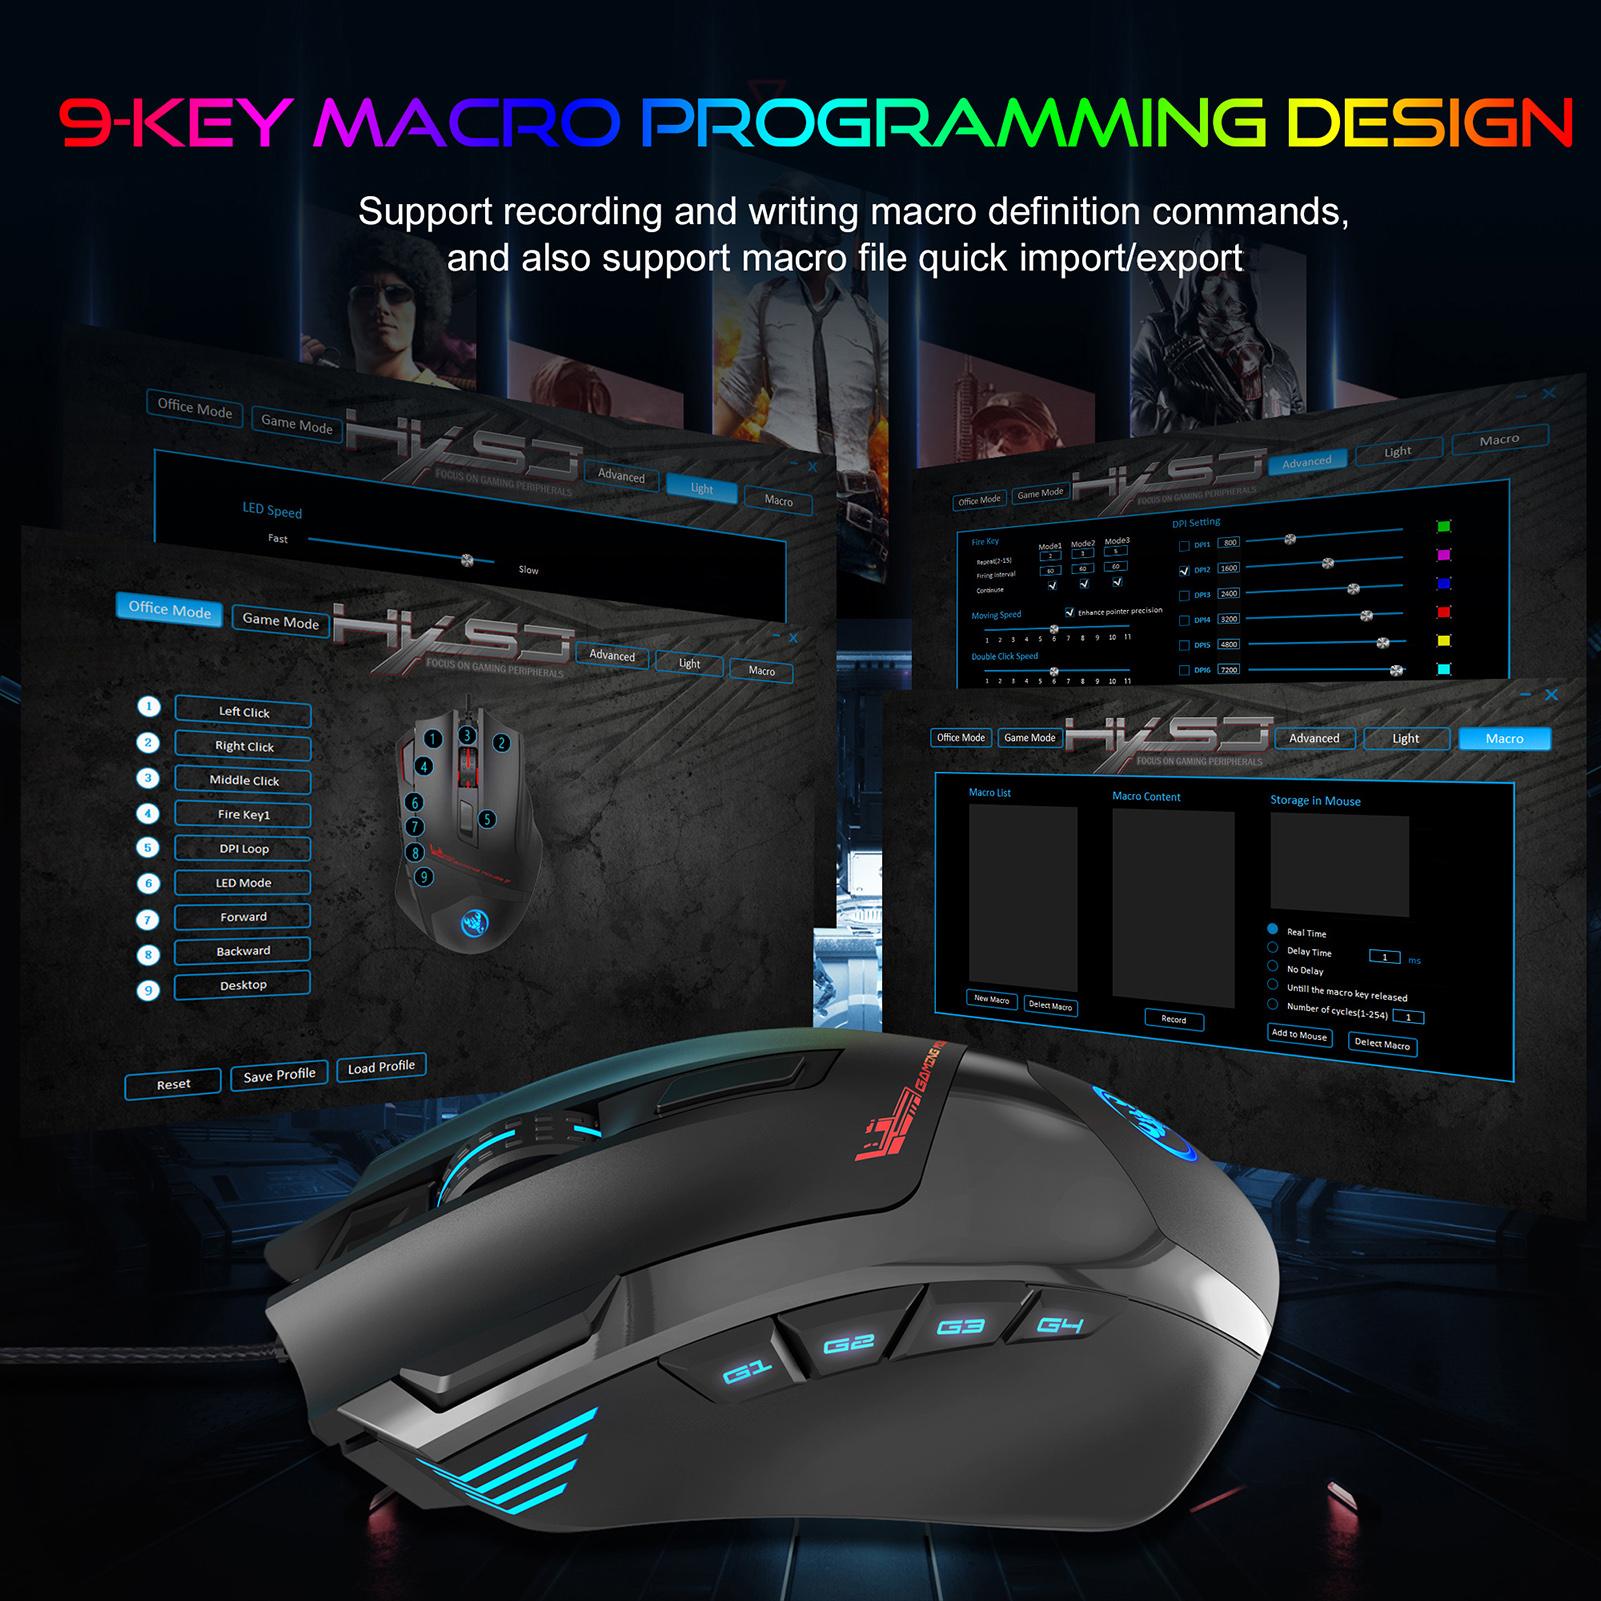 HXSJ S600 Wired Macro Programming Gaming Mouse 9 Keys Ergonomic Mice with 6 Adjustable DPI RGB Light Effect